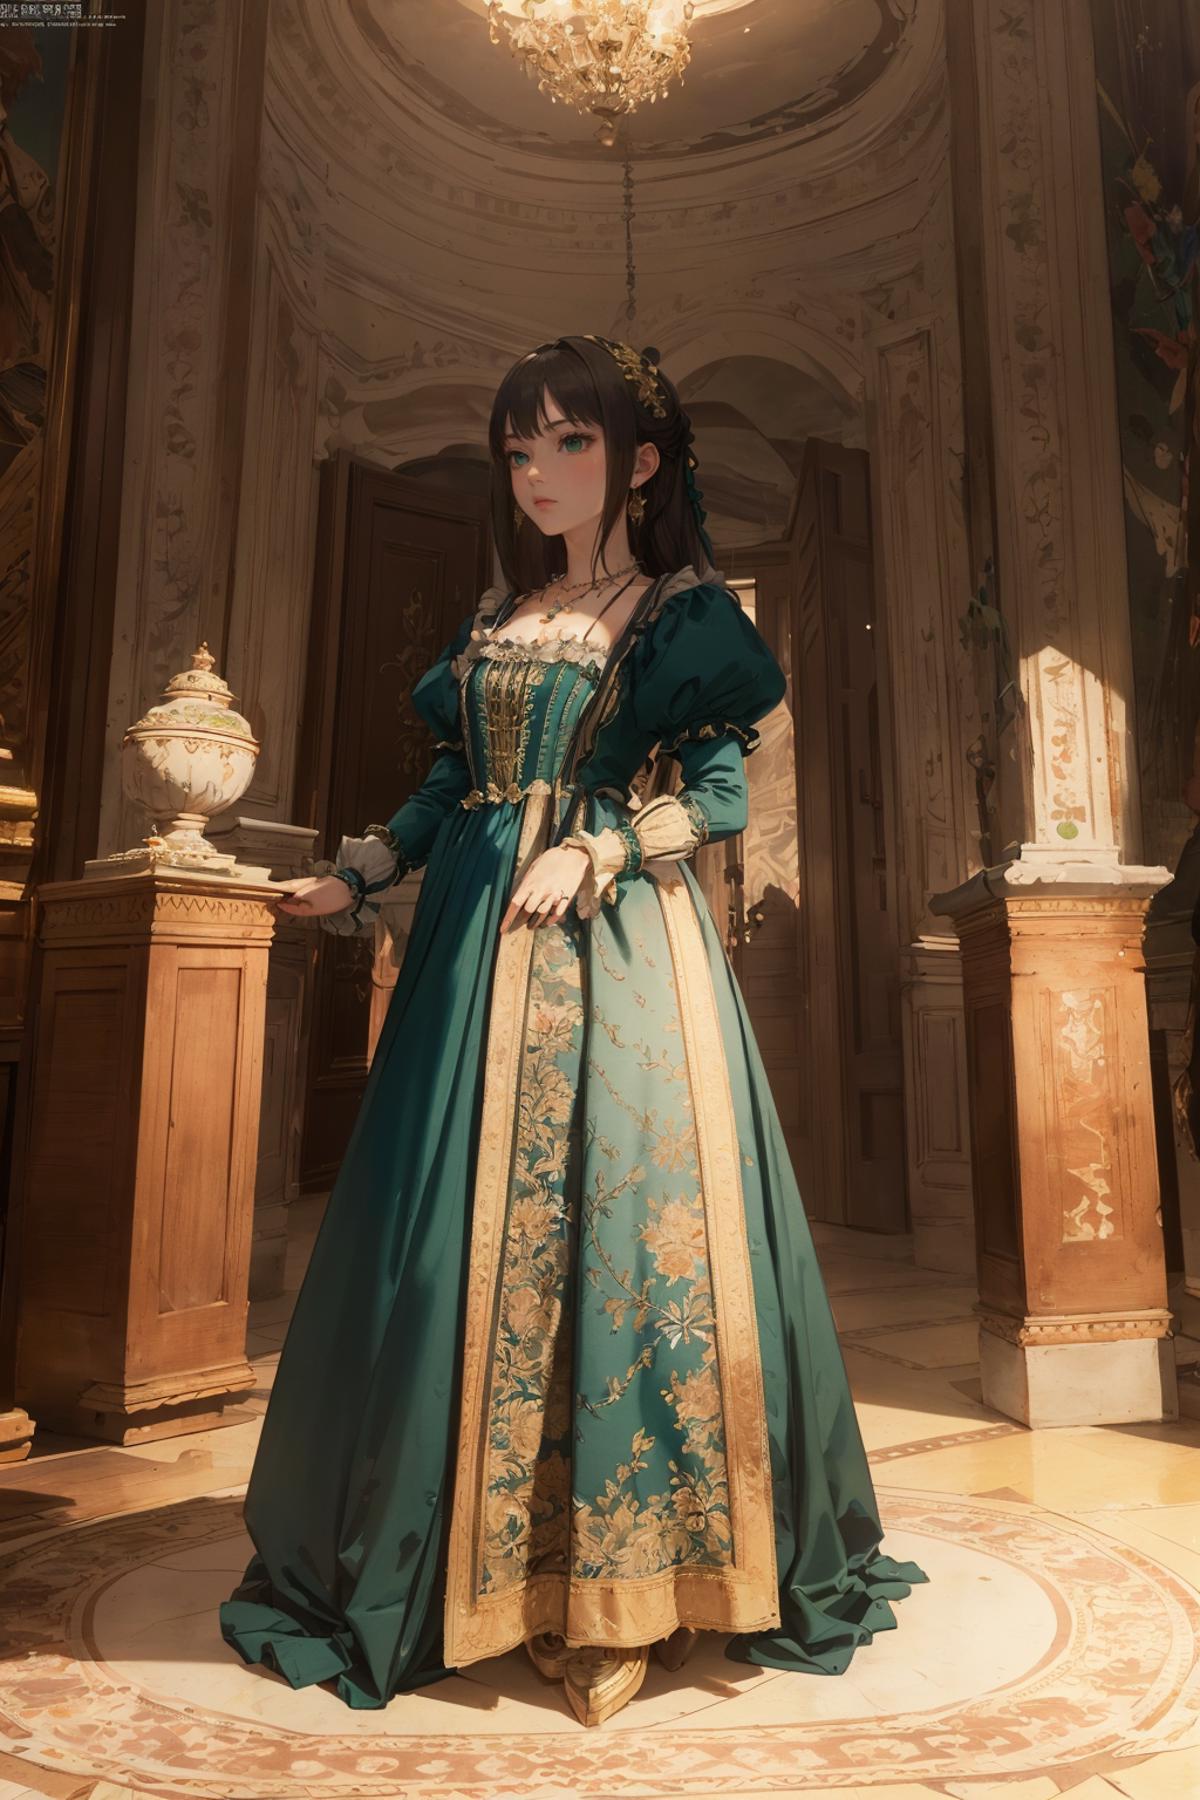 Renaissance Dress - by EDG image by Tokugawa